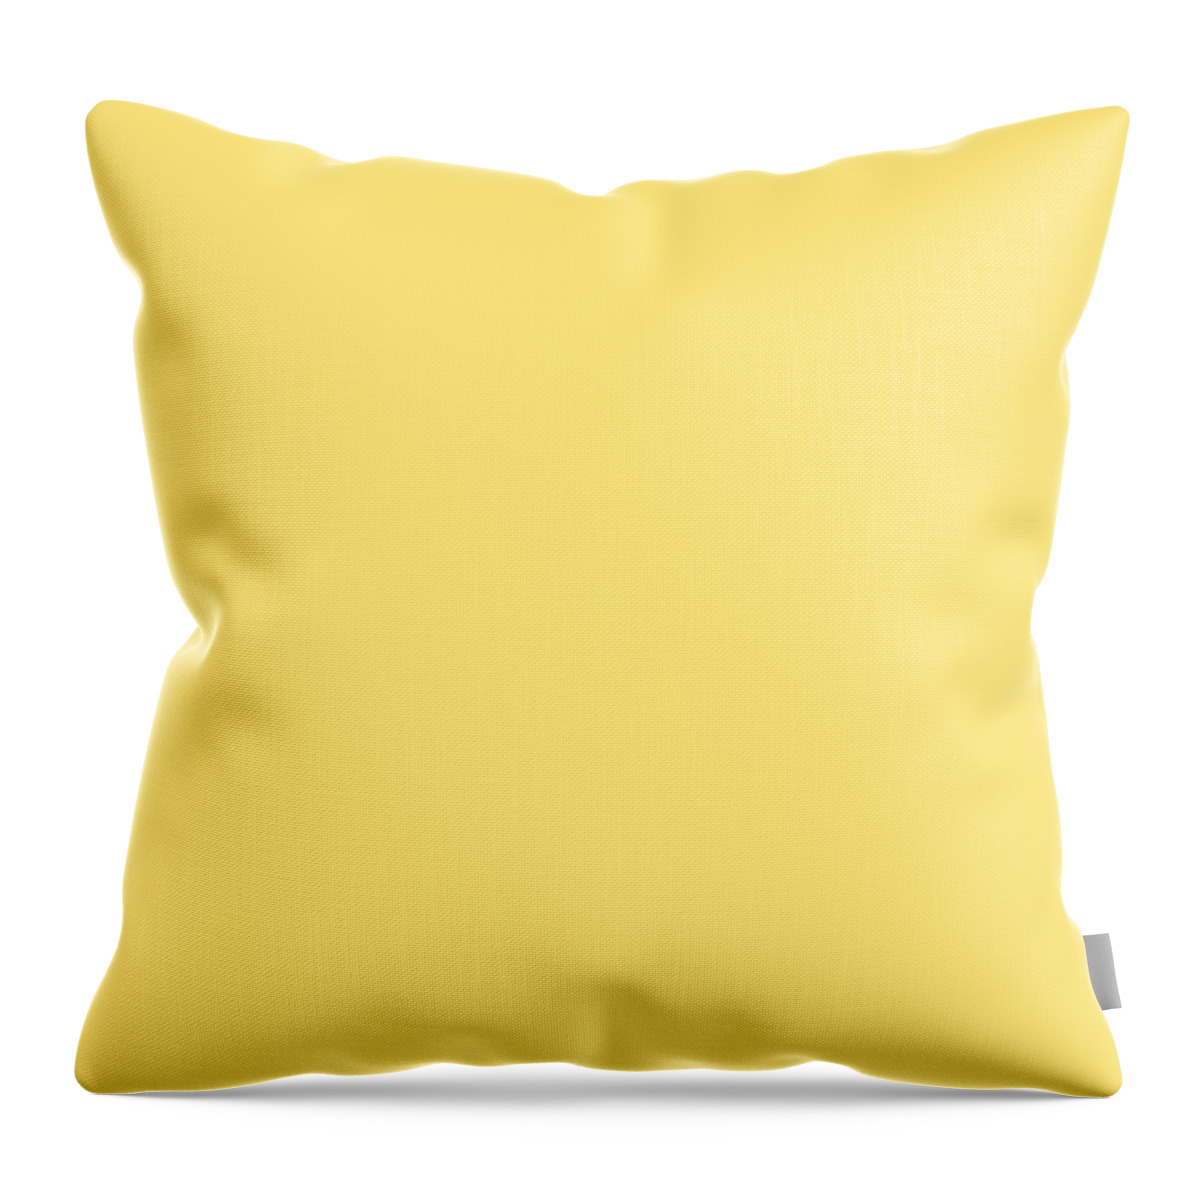 Sun Yellow Throw Pillow featuring the digital art Sun Yellow by TintoDesigns